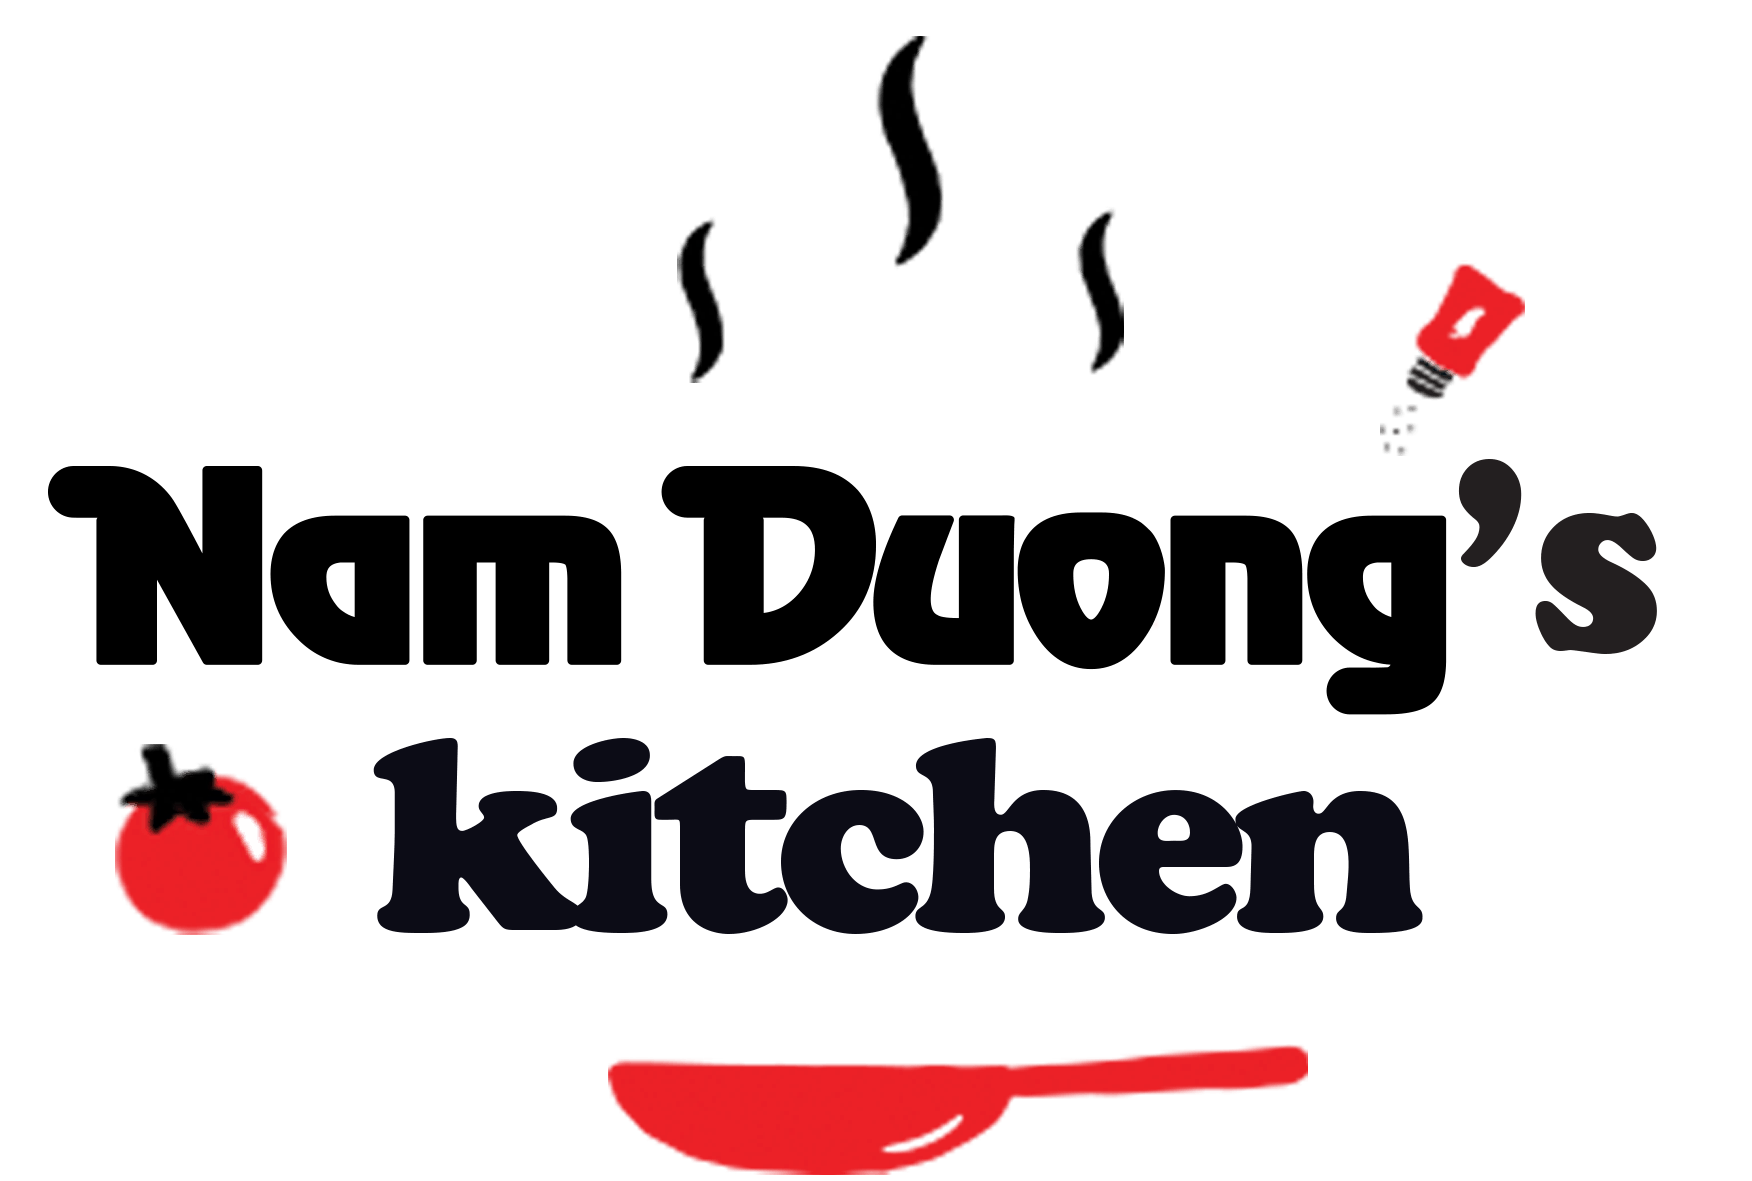 Nam Duong's kitchen